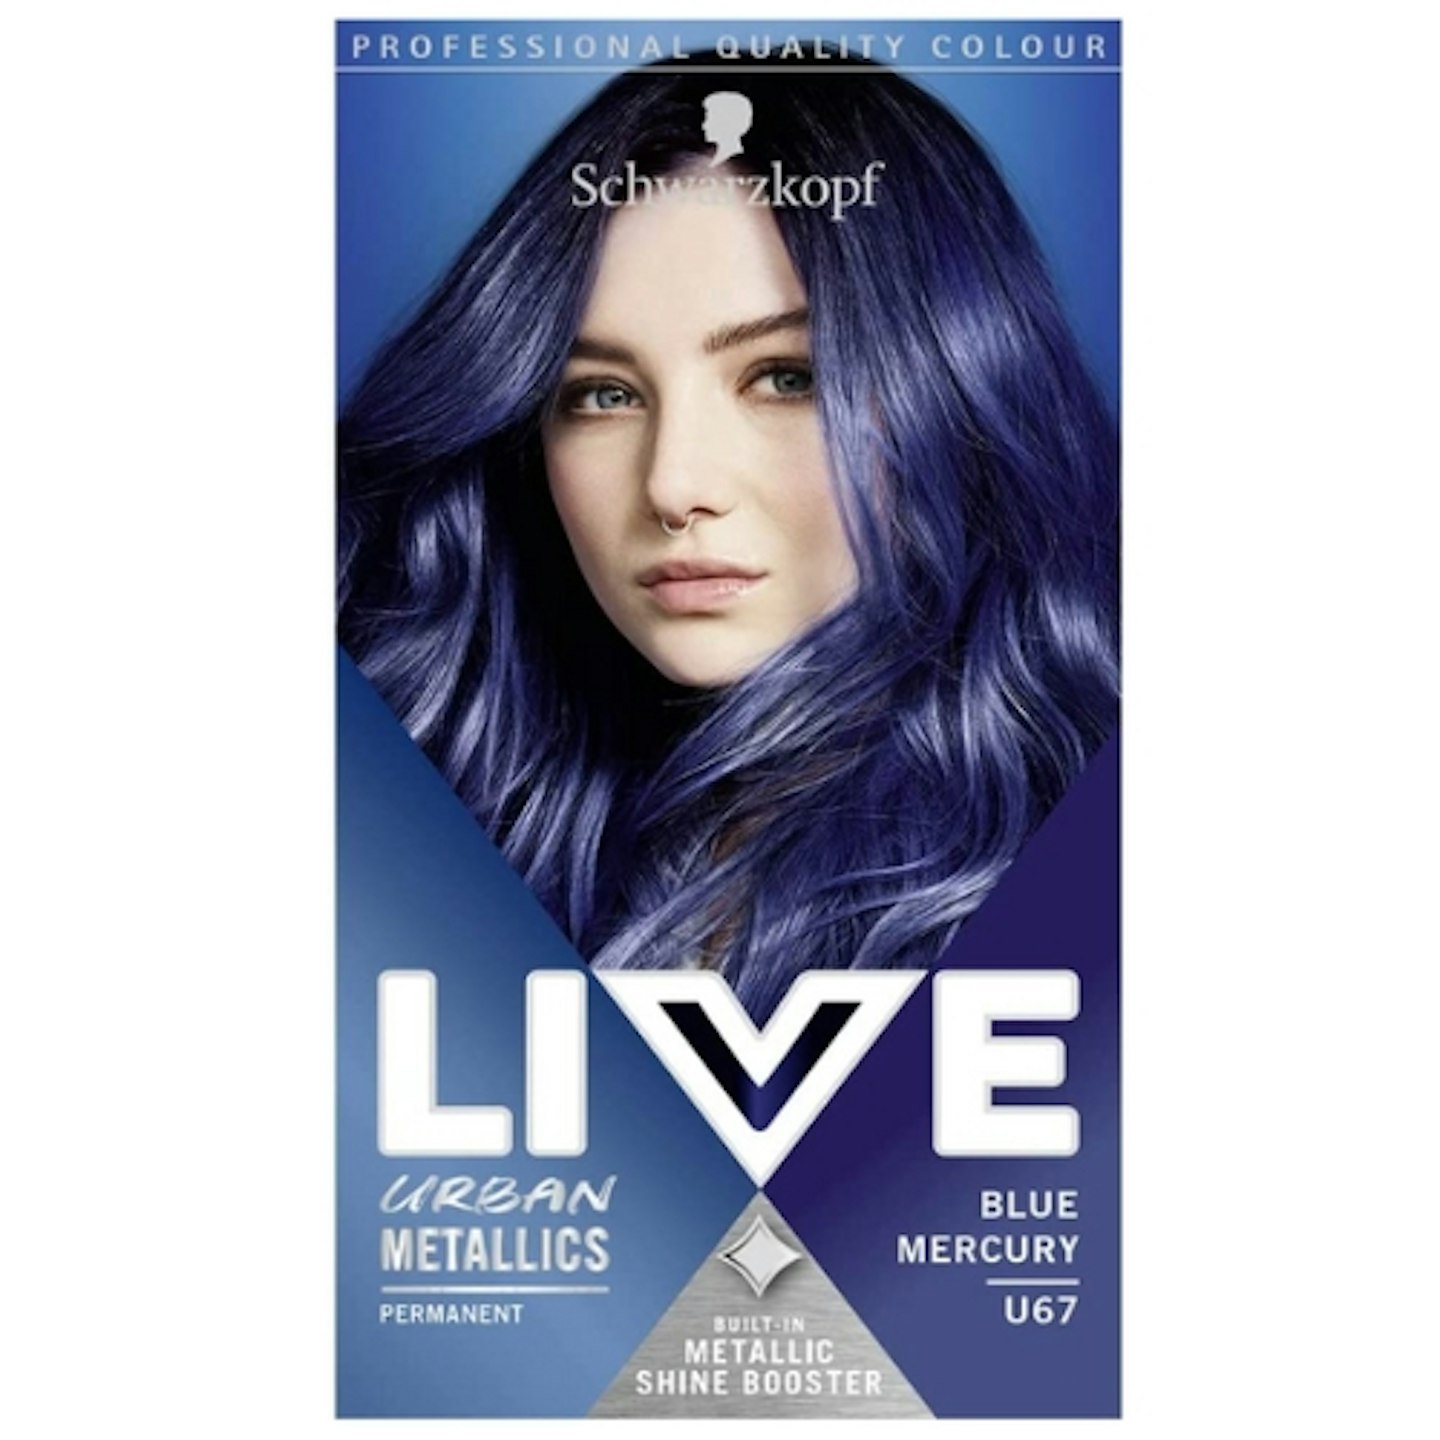 Schwarzkopf LIVE Urban Metallics Vibrant Permanent Blue Hair Dye, Infused with Coconut Oil for Shiny Hair, Blue Mercury U67